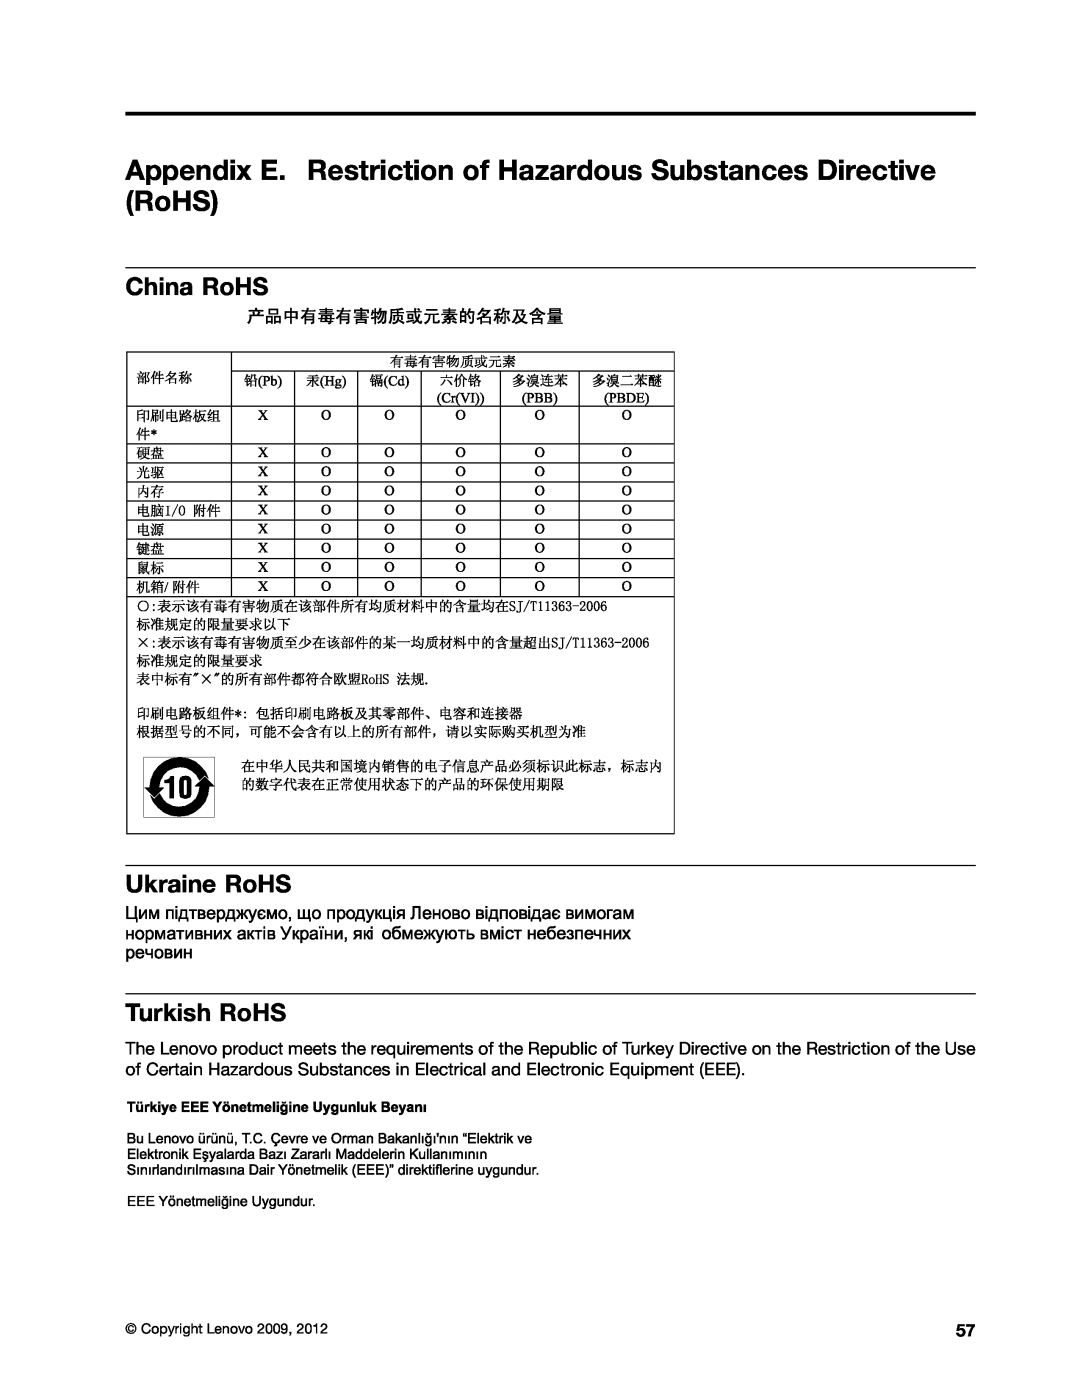 Lenovo 4157, 4105 Appendix E. Restriction of Hazardous Substances Directive RoHS, China RoHS Ukraine RoHS Turkish RoHS 